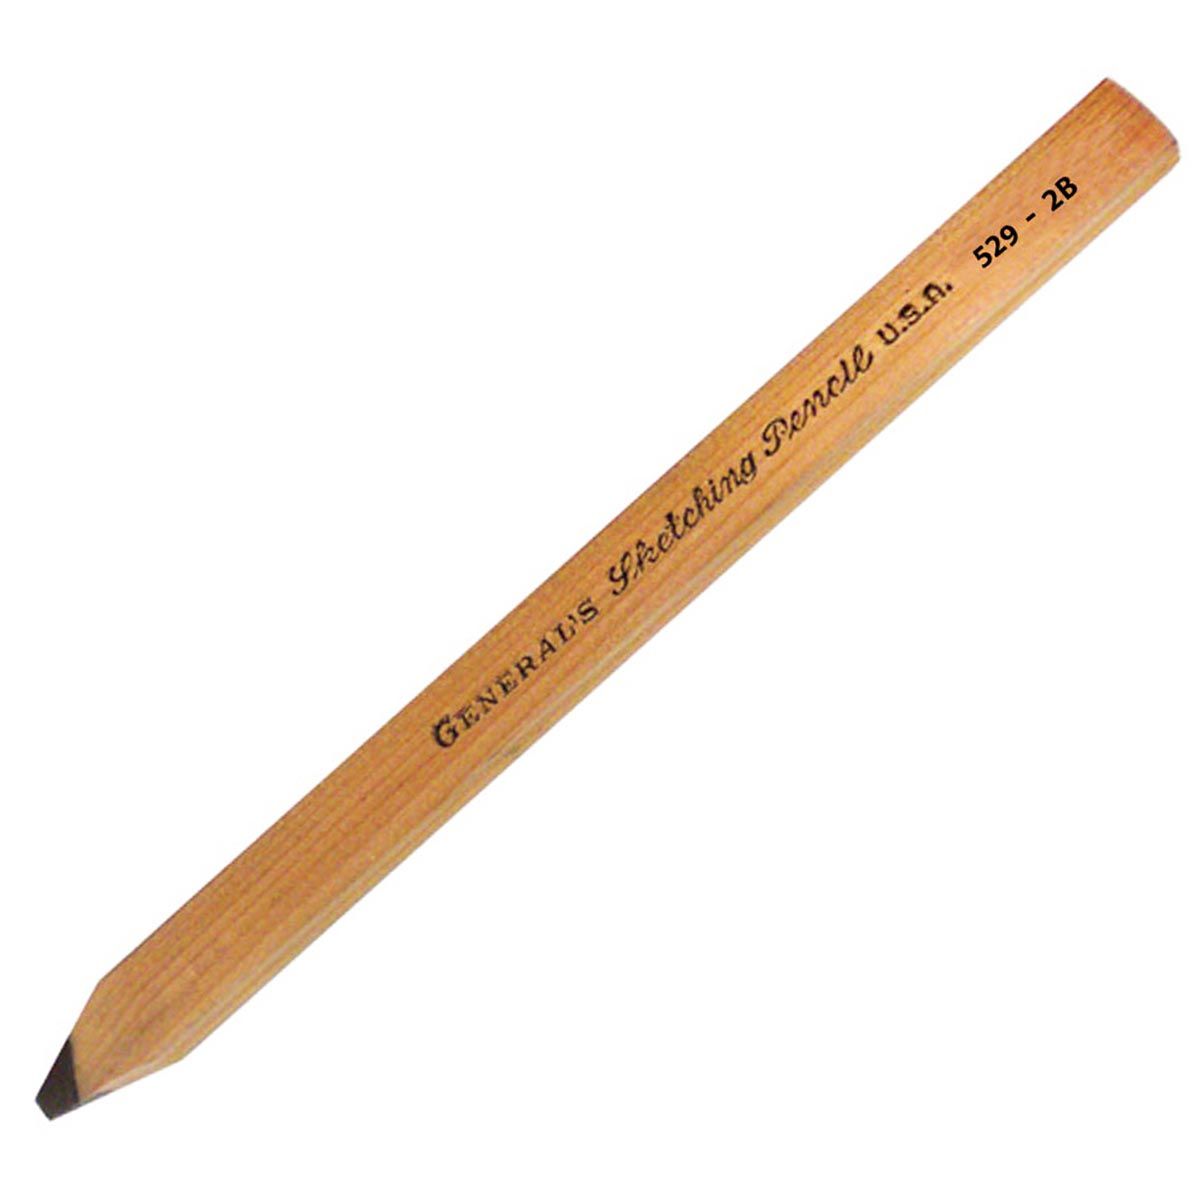 General's Sketching Flat Pencil - 2B